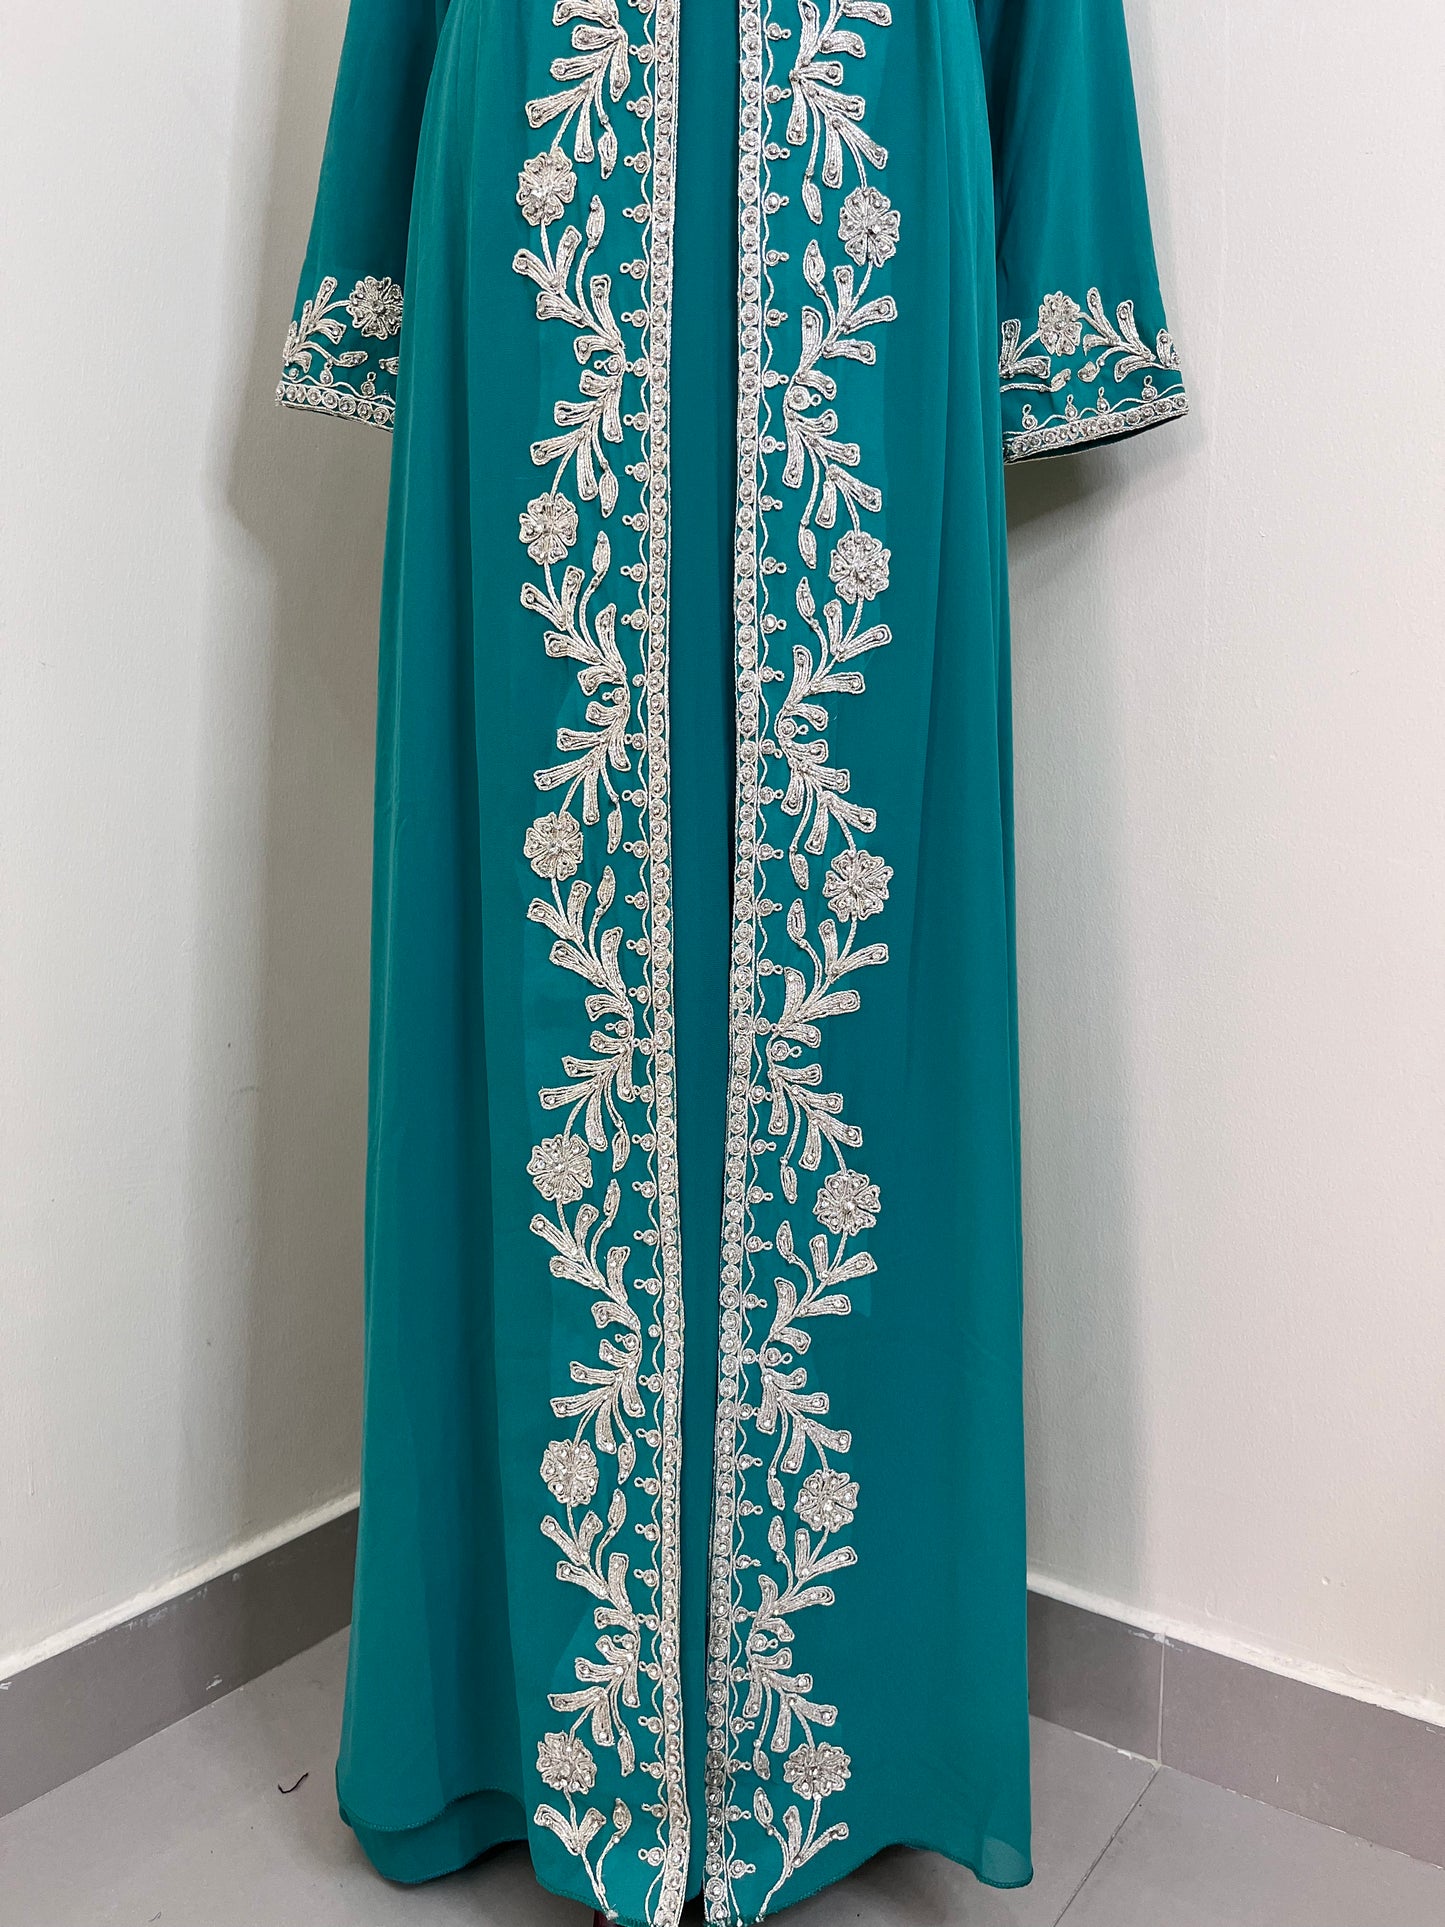 Embellished Three-pieces Kaftan Dress &  jacket with Belt - قفطان مطرز من 3 قطع